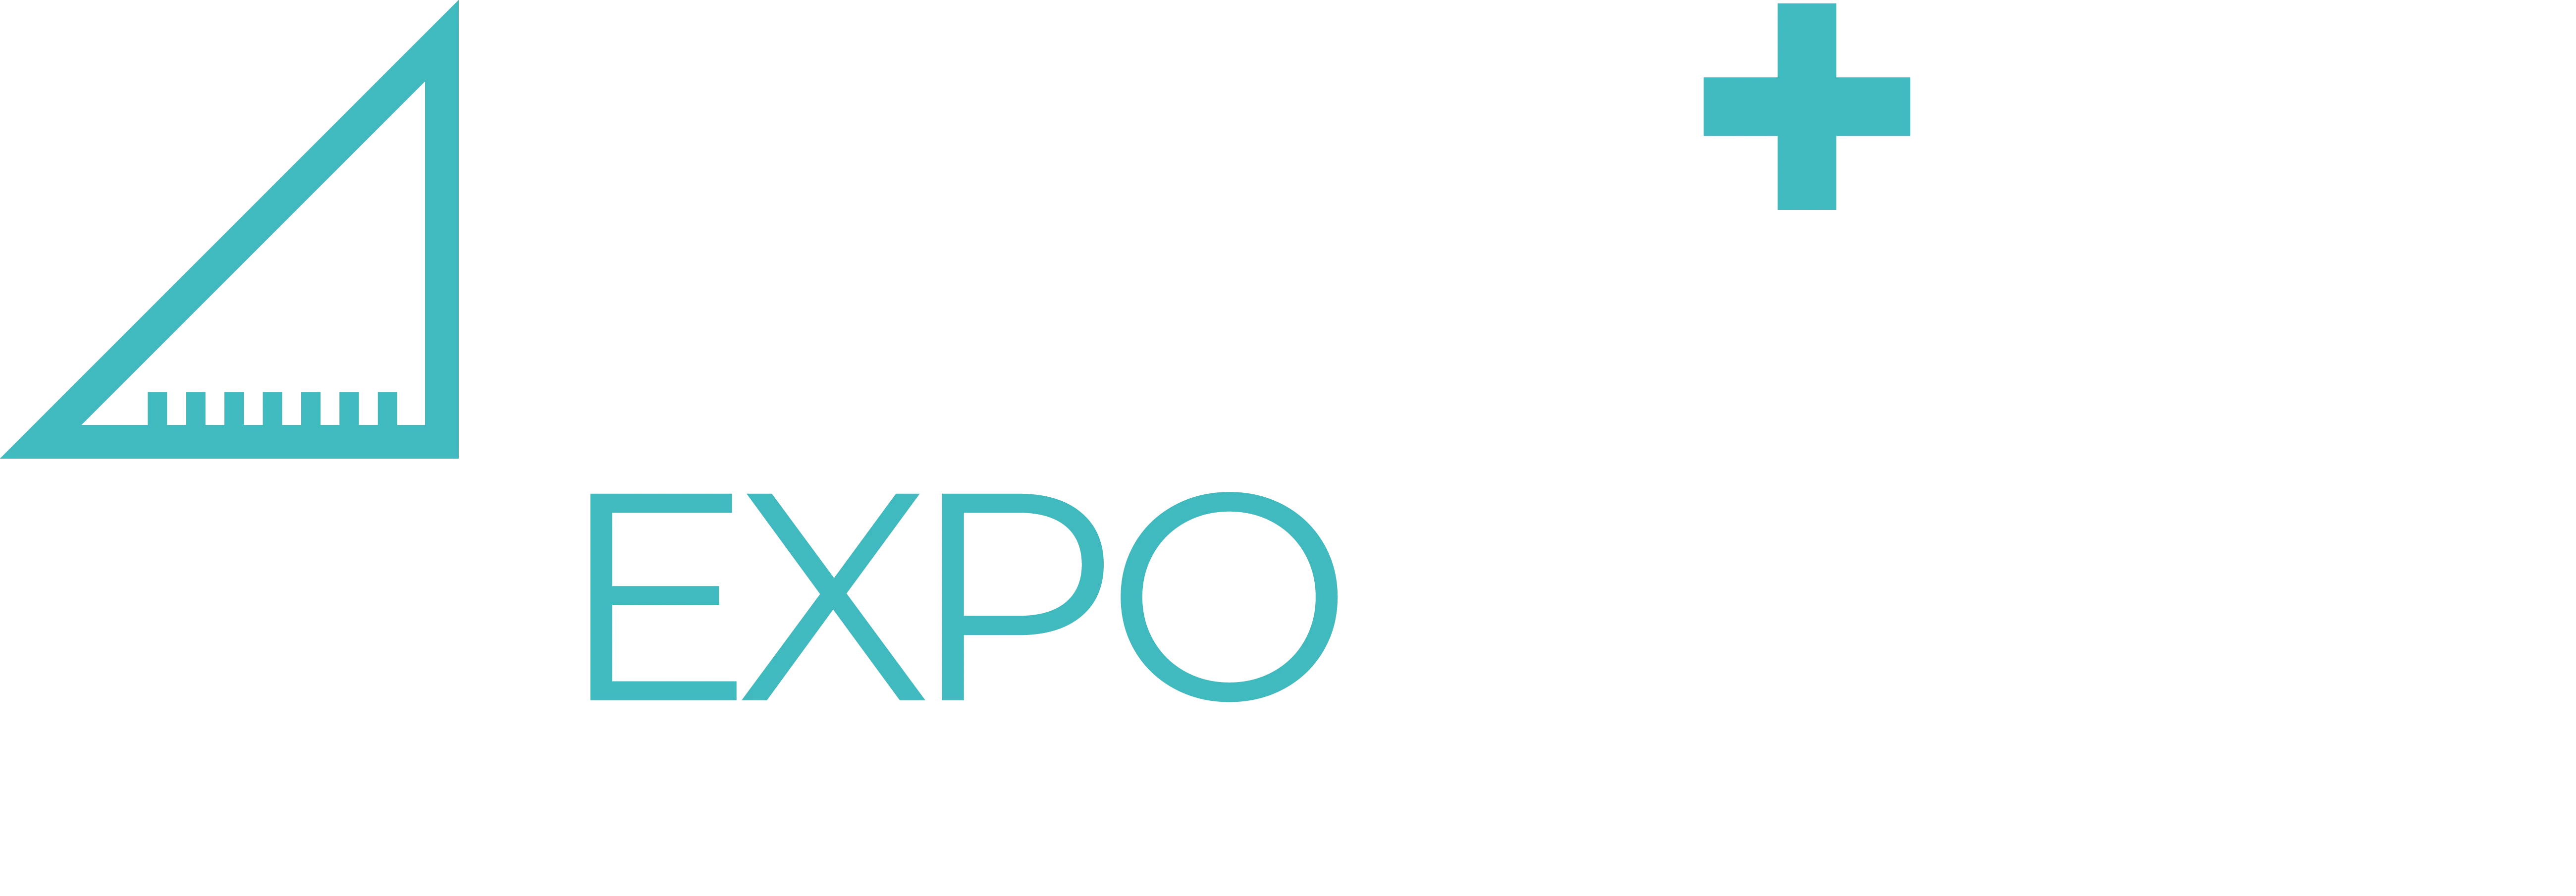 Design+ engineering expo 